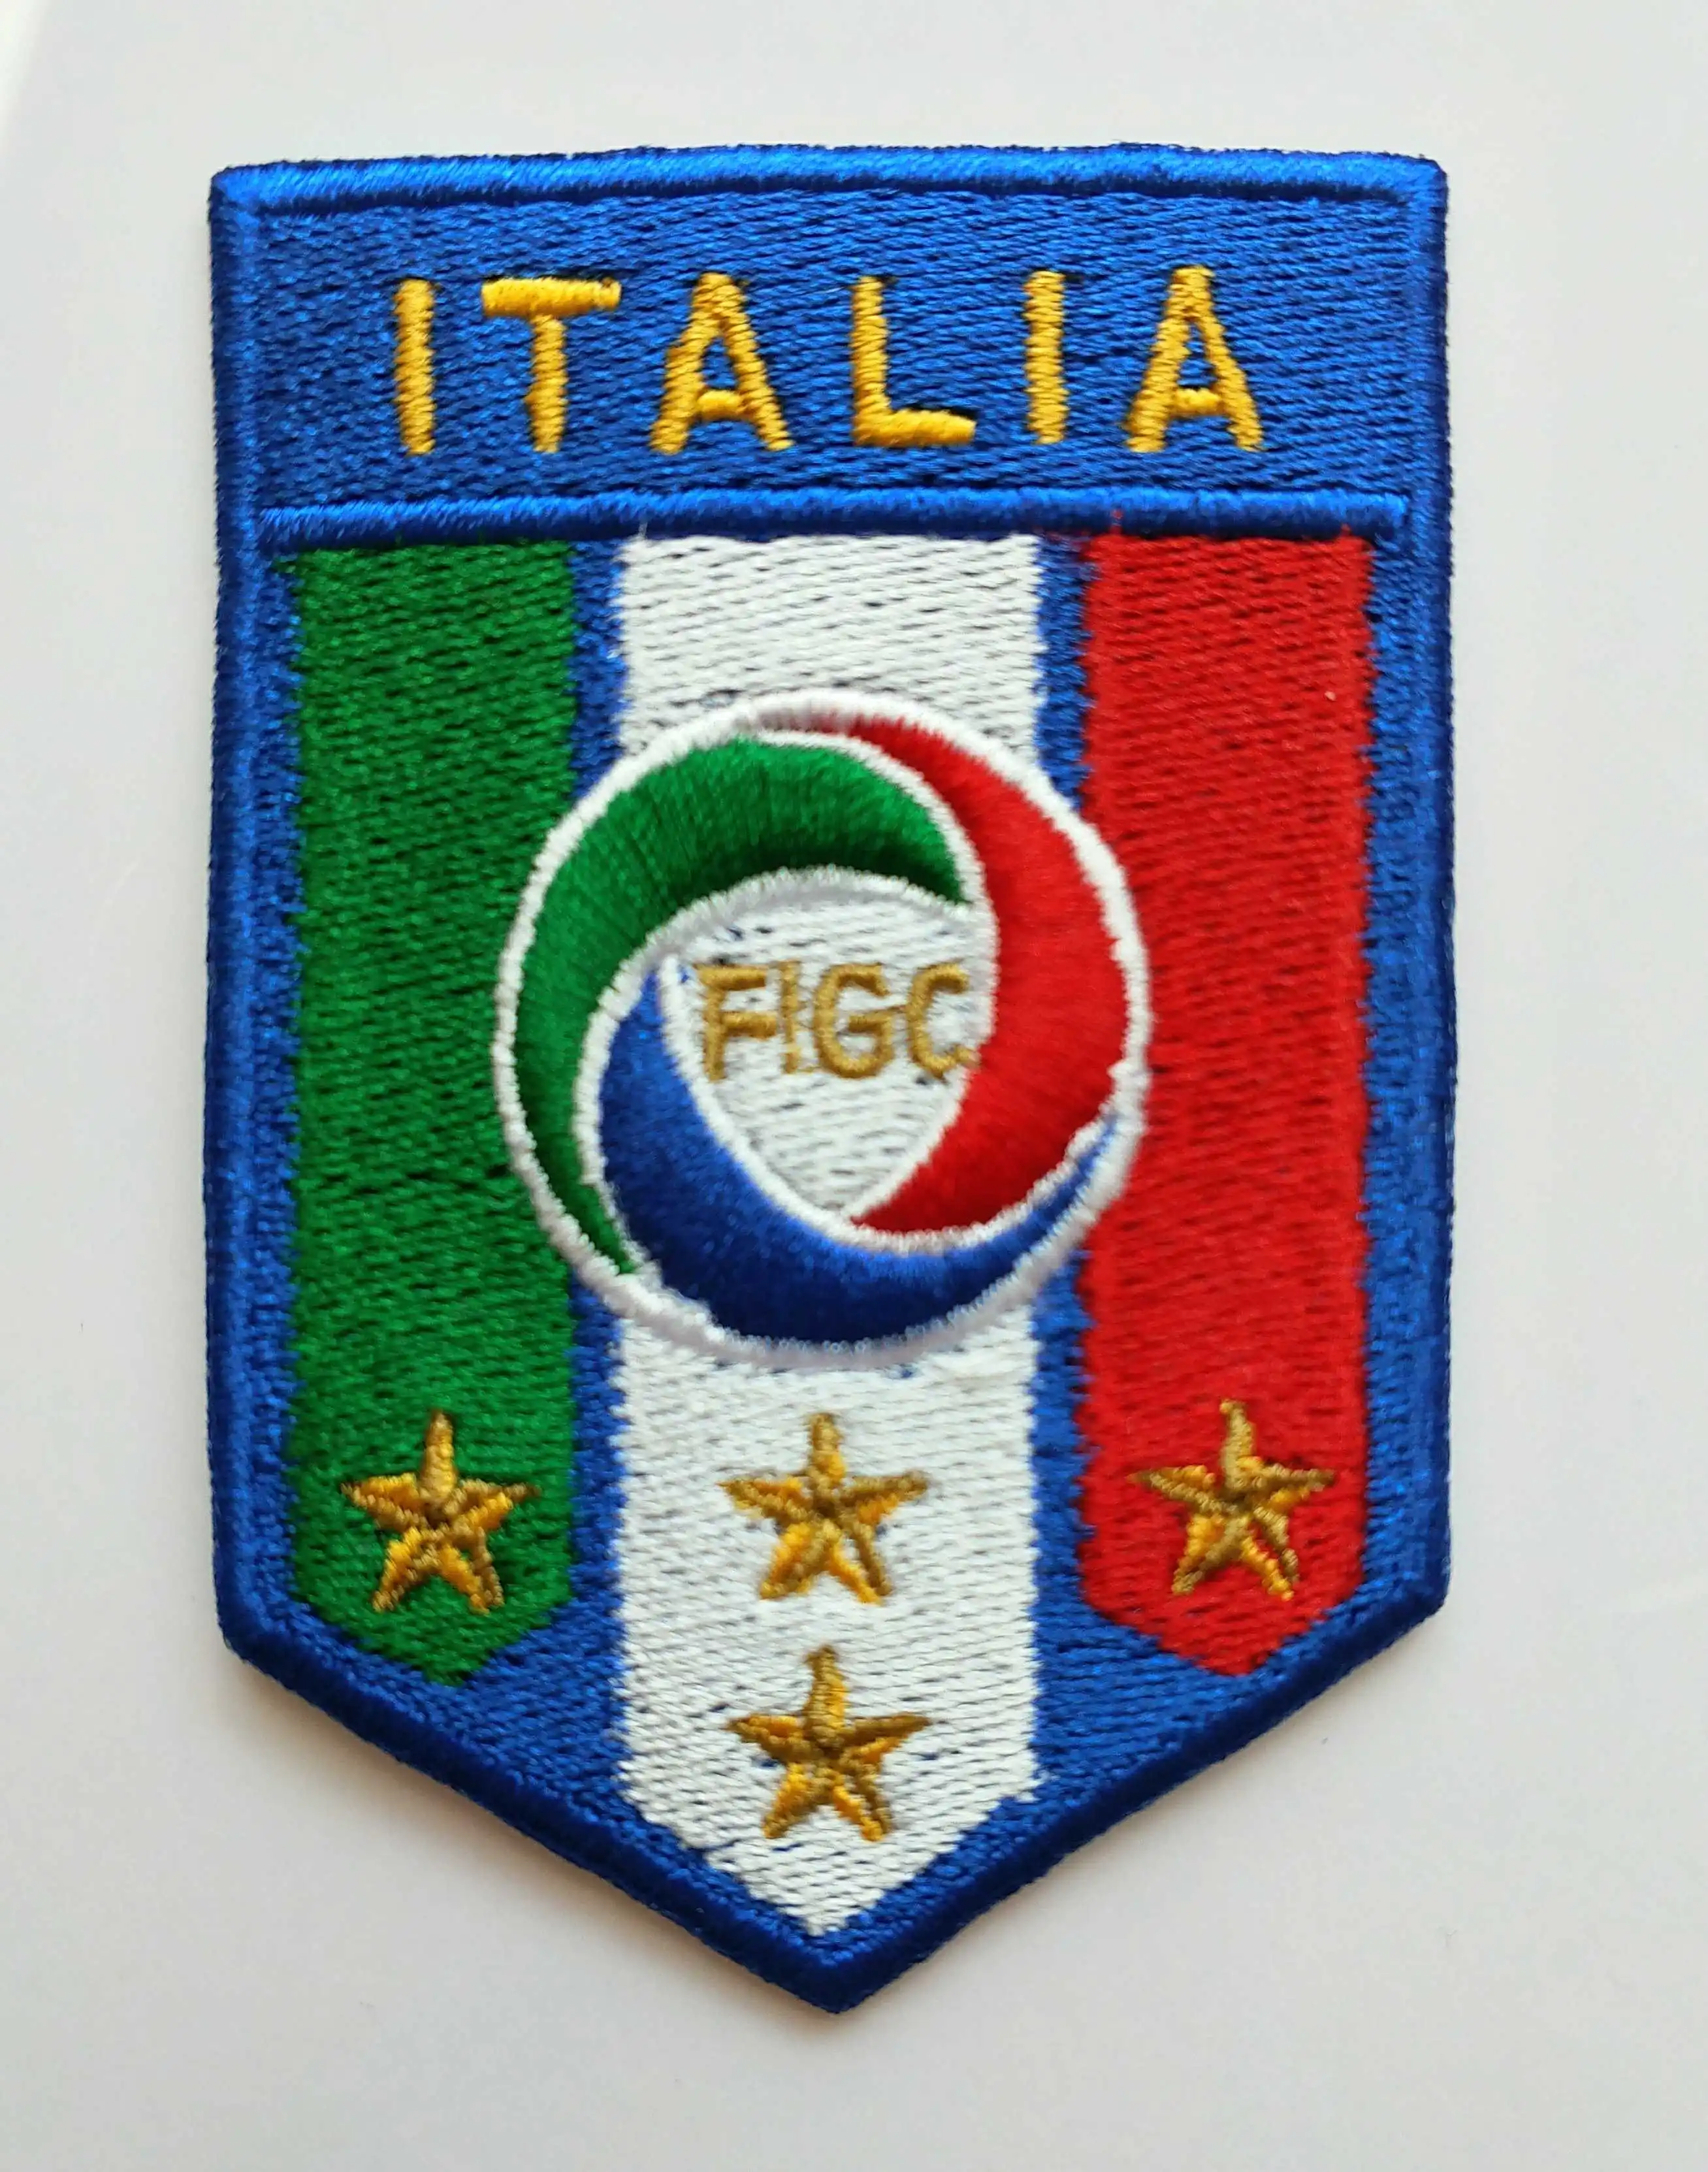 2pcs Football soccer fussball National Team Italy logo iron on Patch Aufnaeher Applique Badge Buegelbild Embroidered